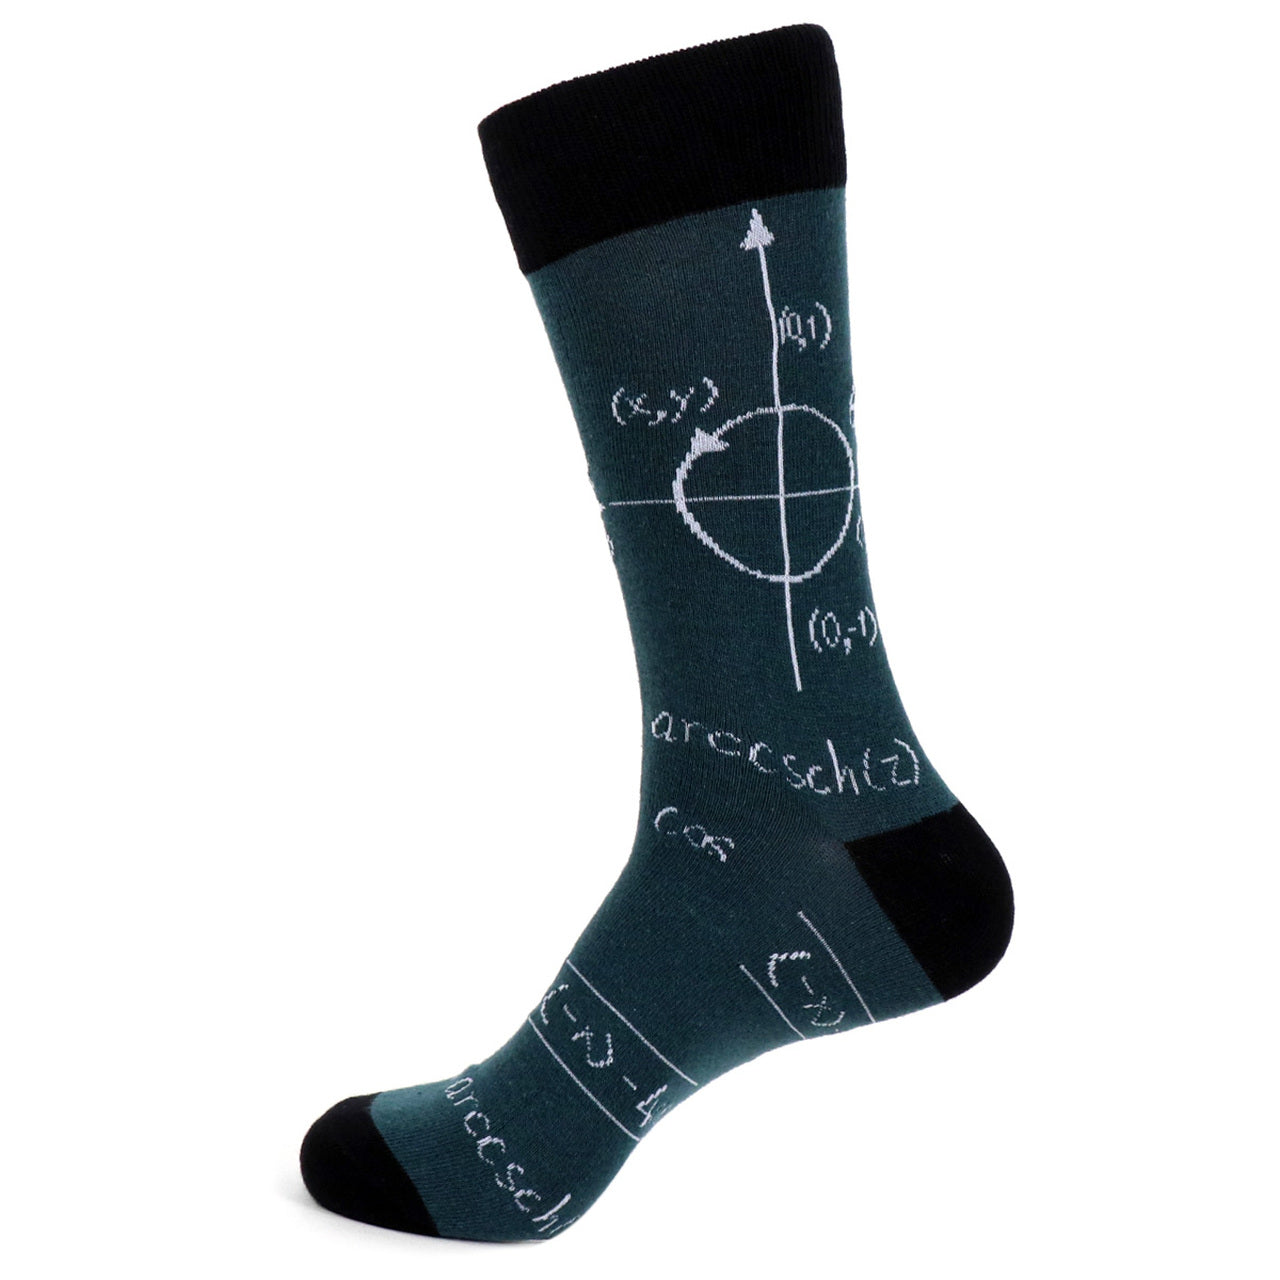 Fun Socks Men's Math Genius Novelty Socks Black and Green Math Lovers Gift for Teacher Mathematics Professor